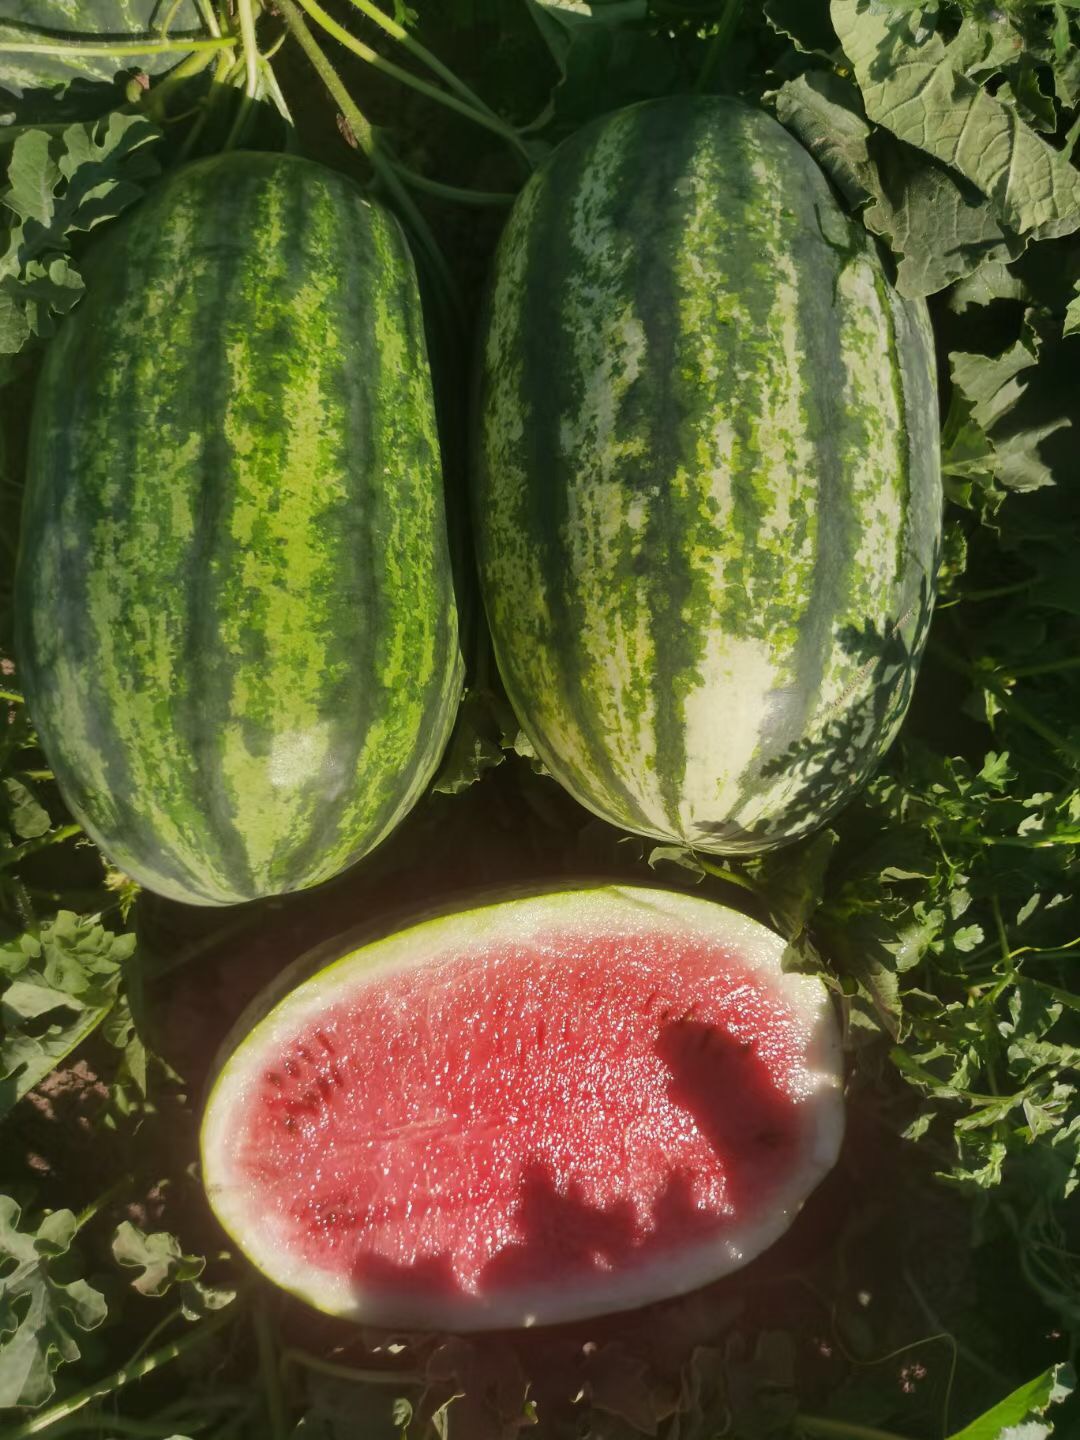 Sunotoday Sweet big size watermelon seeds(11028)